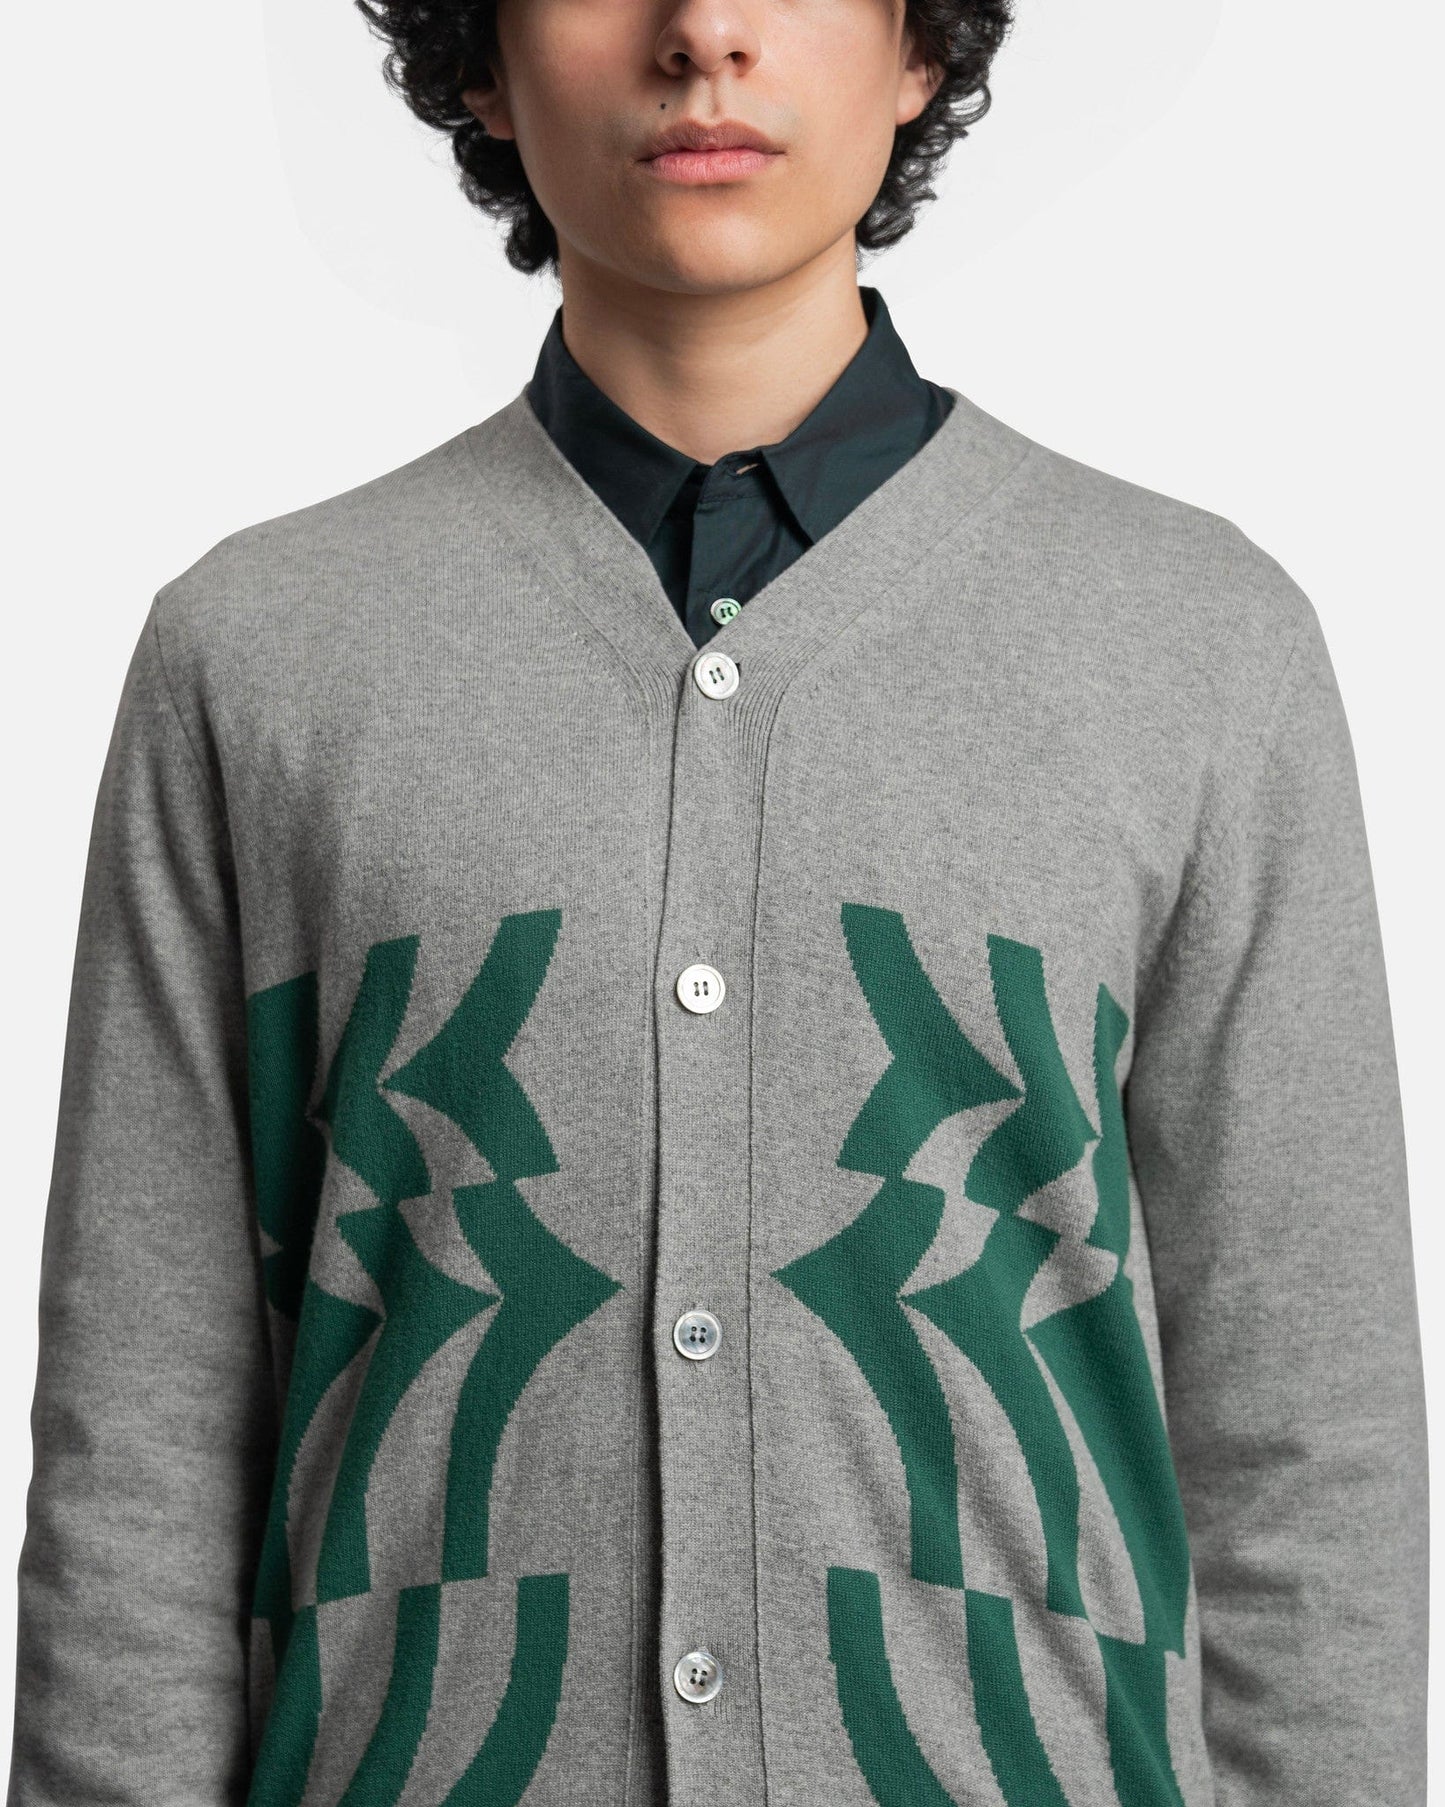 Comme des Garcons Homme Deux Men's Sweater Pattern-Knit Wool Cardigan in Light Grey